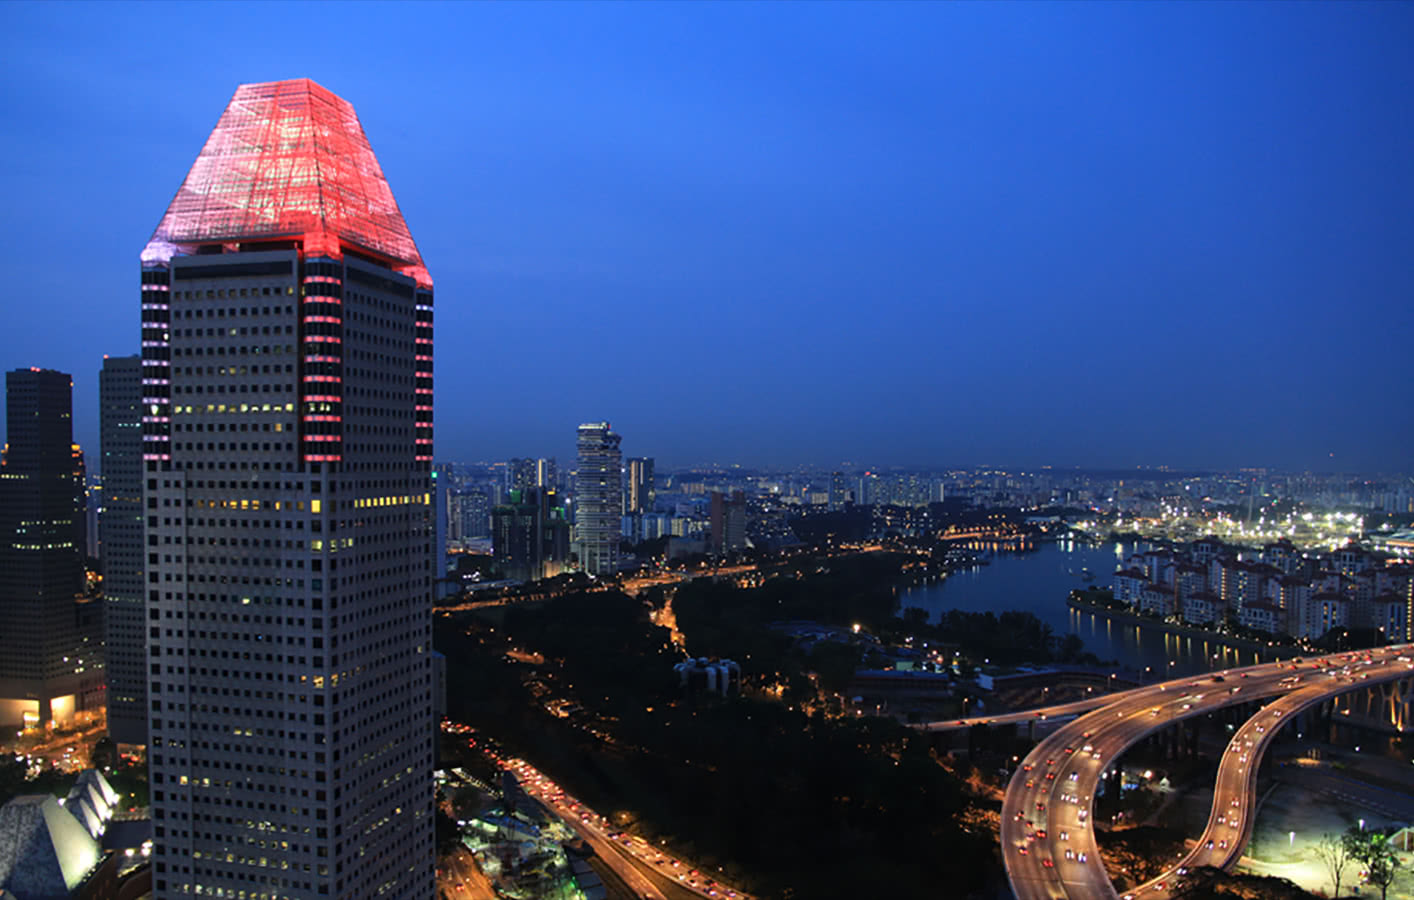 Millenia Tower Singapore